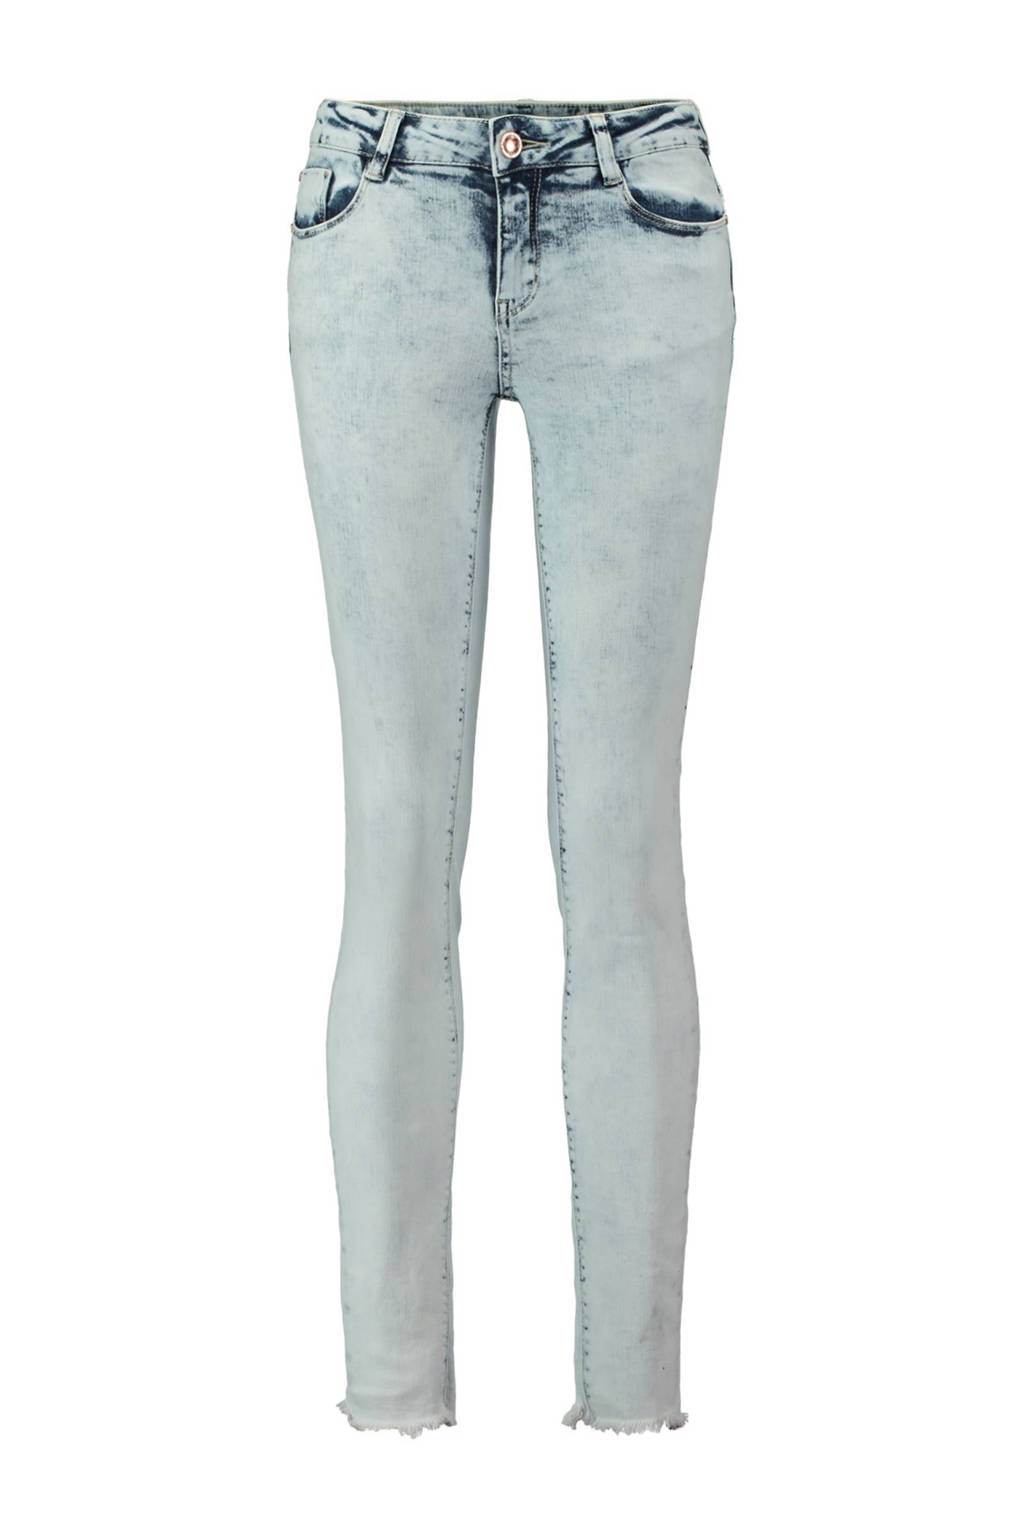 Christchurch Premier Vlot CoolCat skinny fit jeans met lage taille | wehkamp